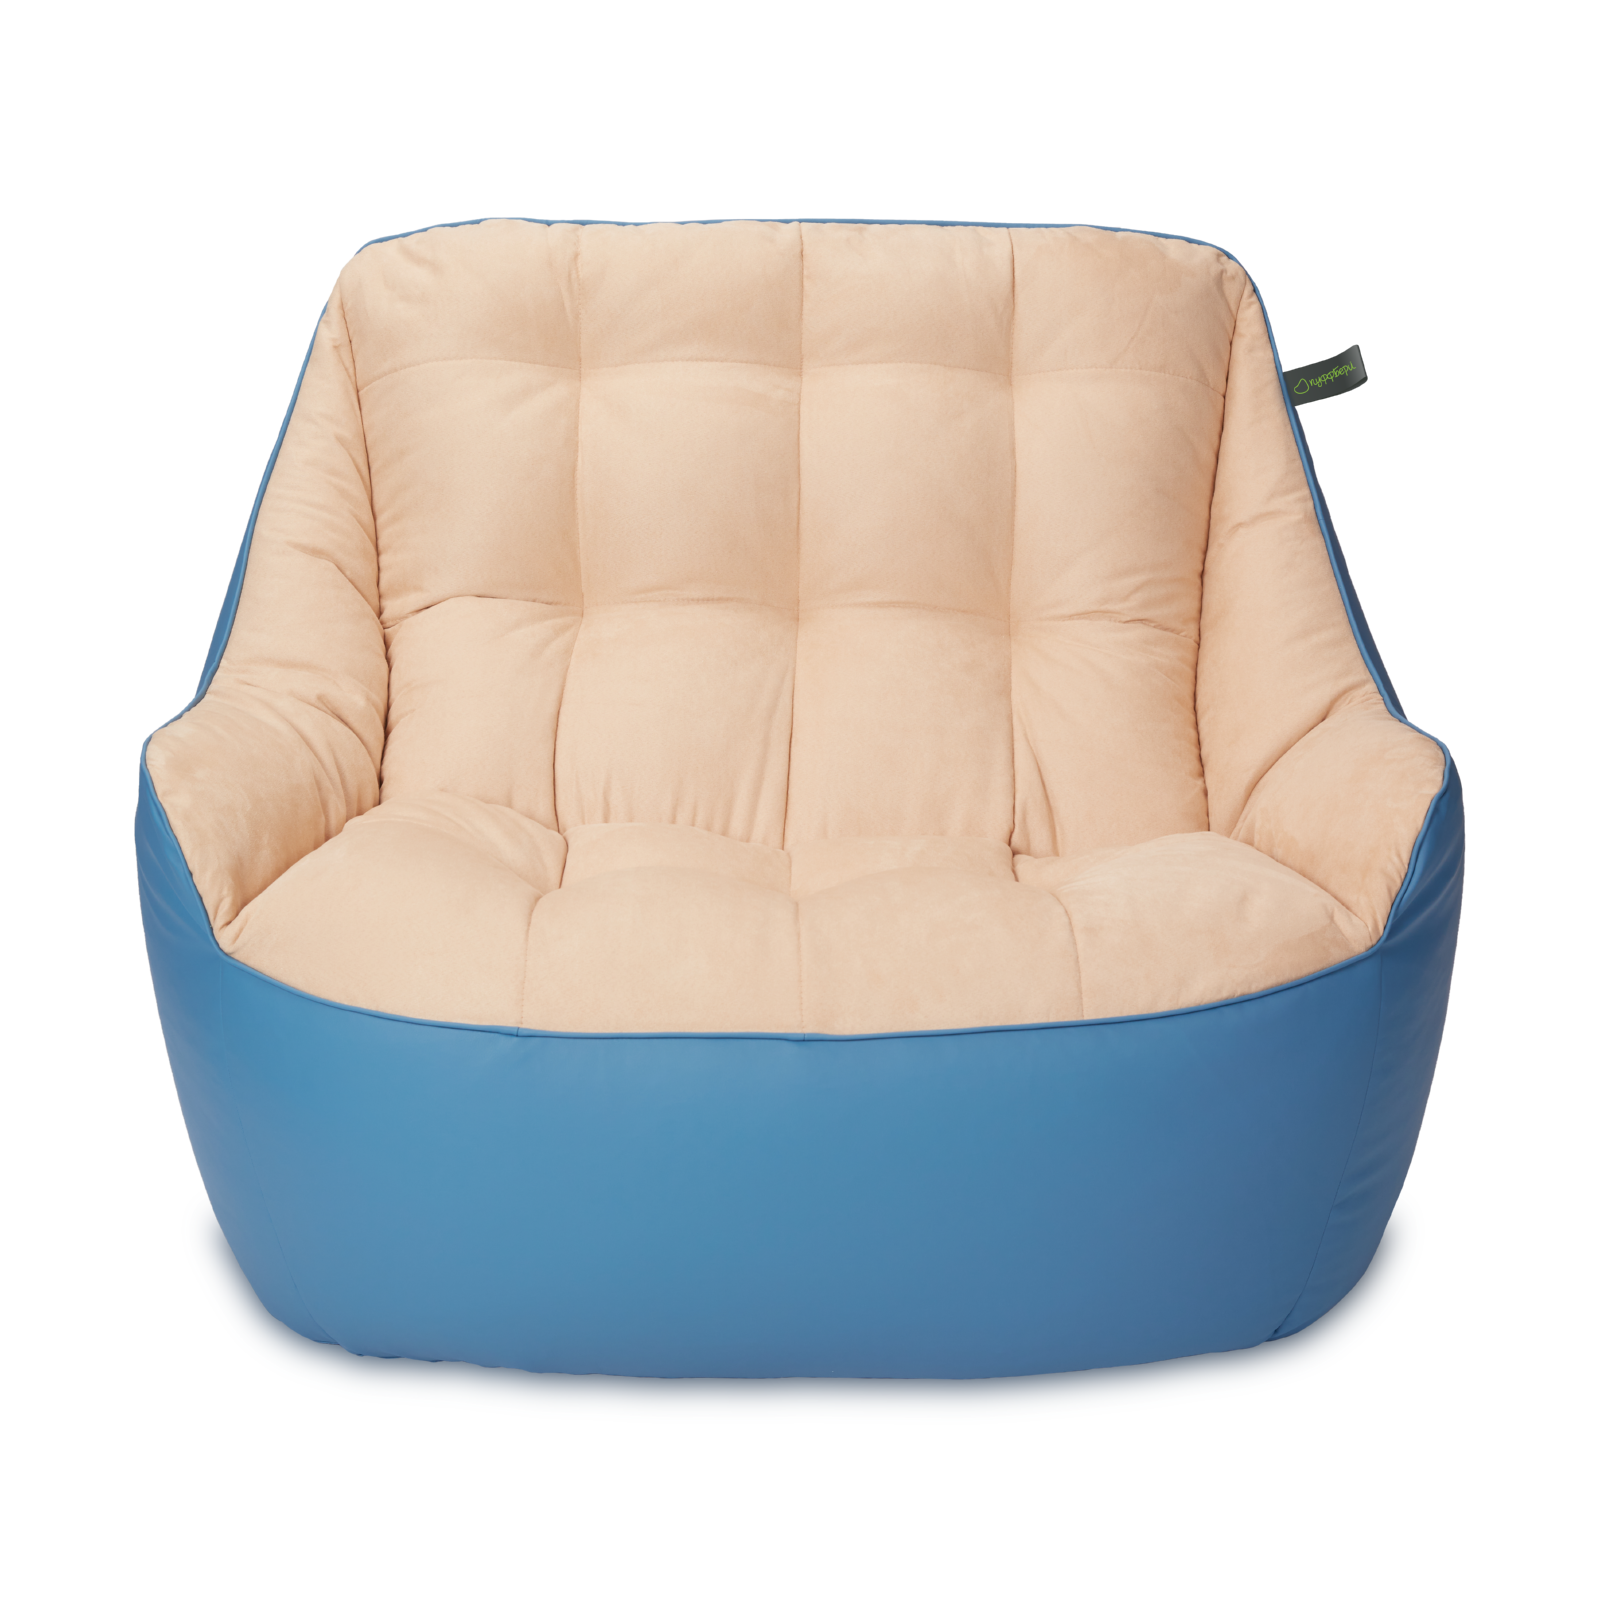 фото Кресло мешок «диван босс», эко-кожа и замша, синий и бежевый пуффбери